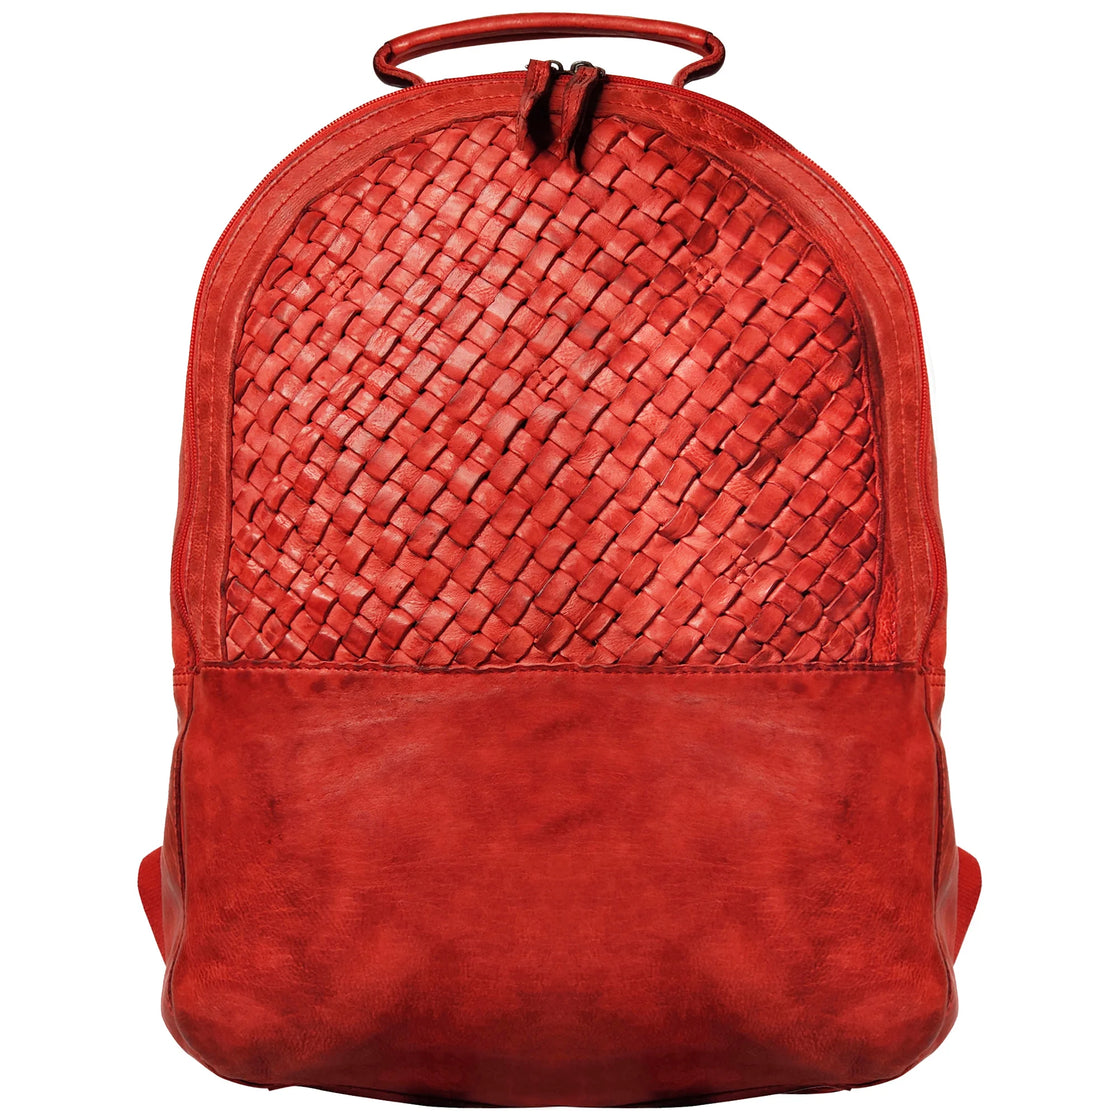 Janine | Santini women's leather backpack